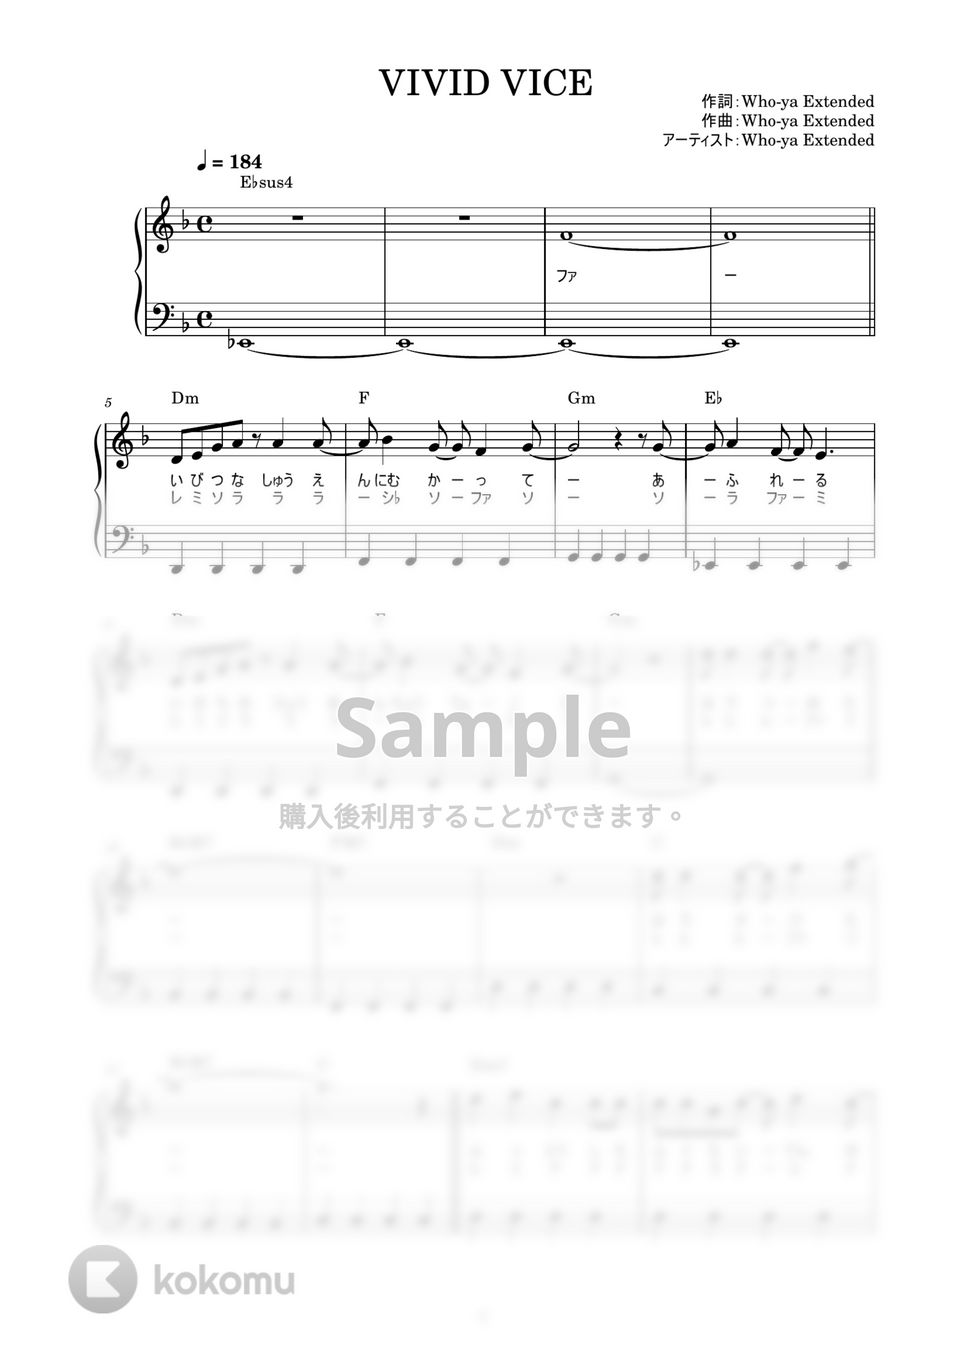 Who-ya Extended - VIVID VICE (かんたん / 歌詞付き / ドレミ付き / 初心者) by piano.tokyo